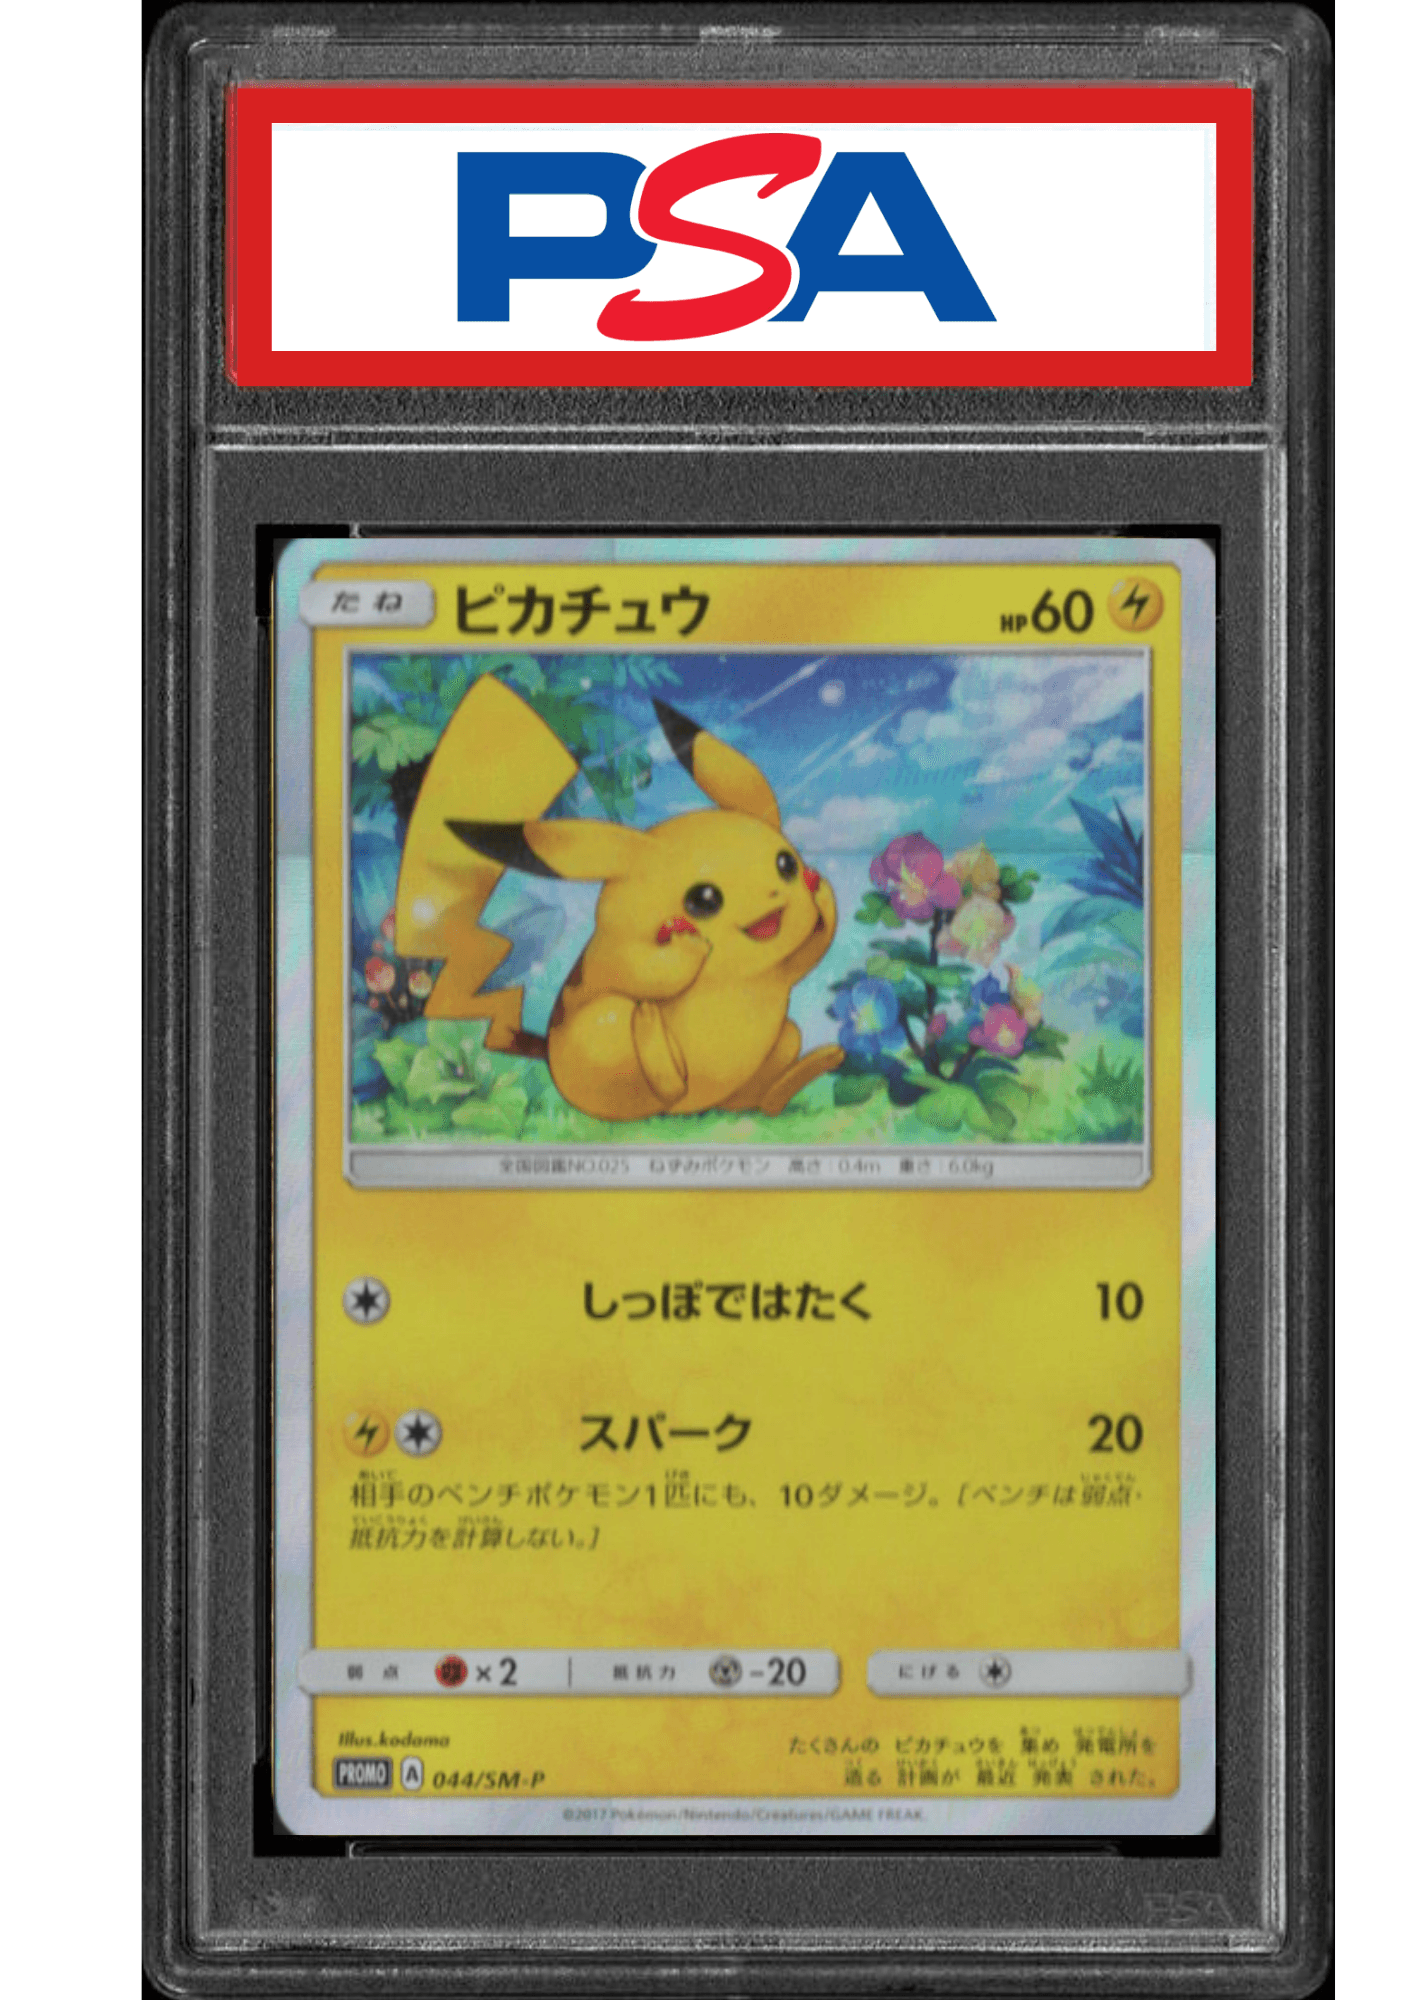 Pikachu 044/sm-p | Special set Promo | PSA ChitoroShop